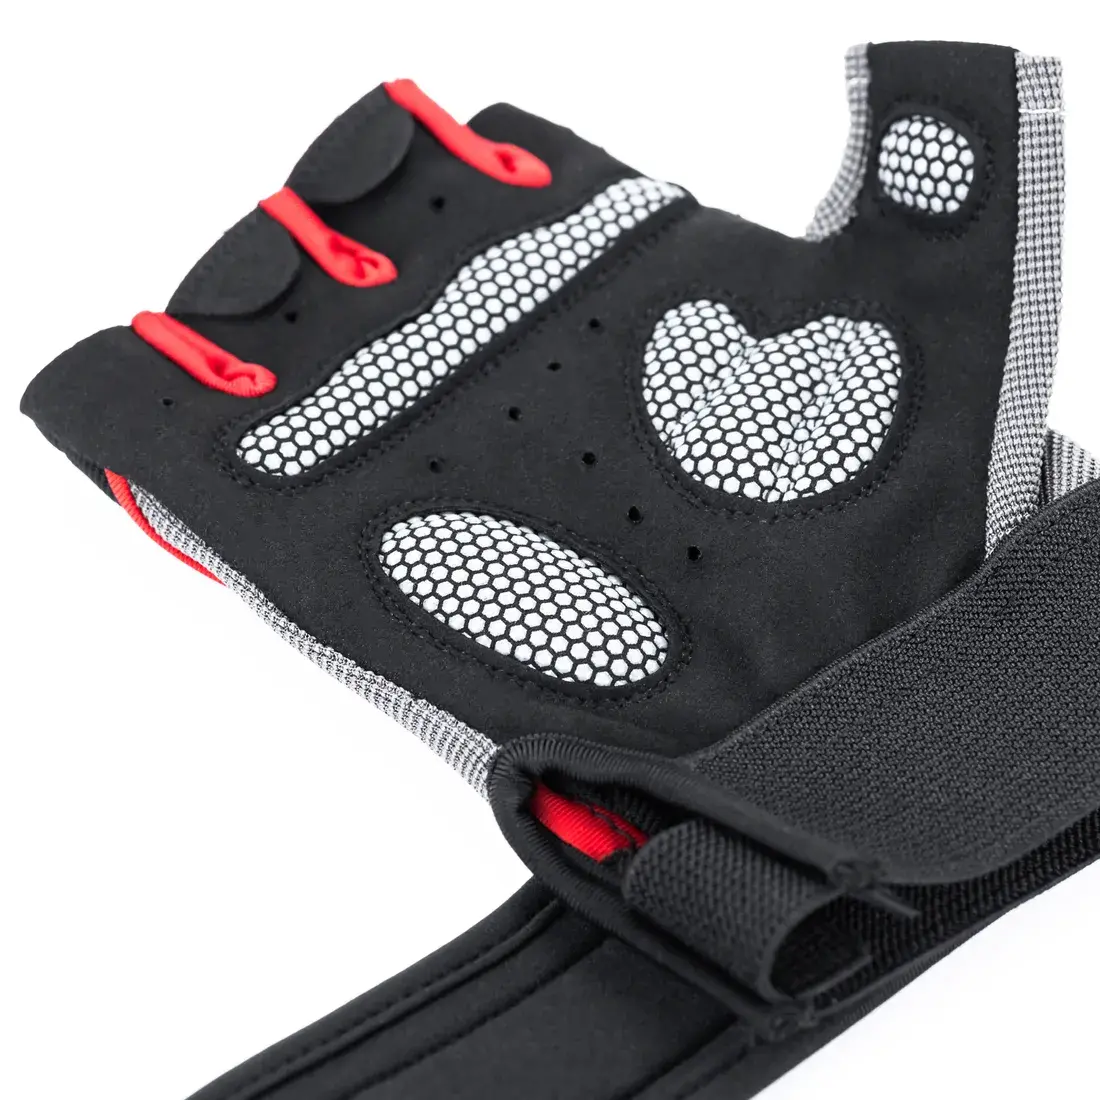 DBX glove anti-slip system